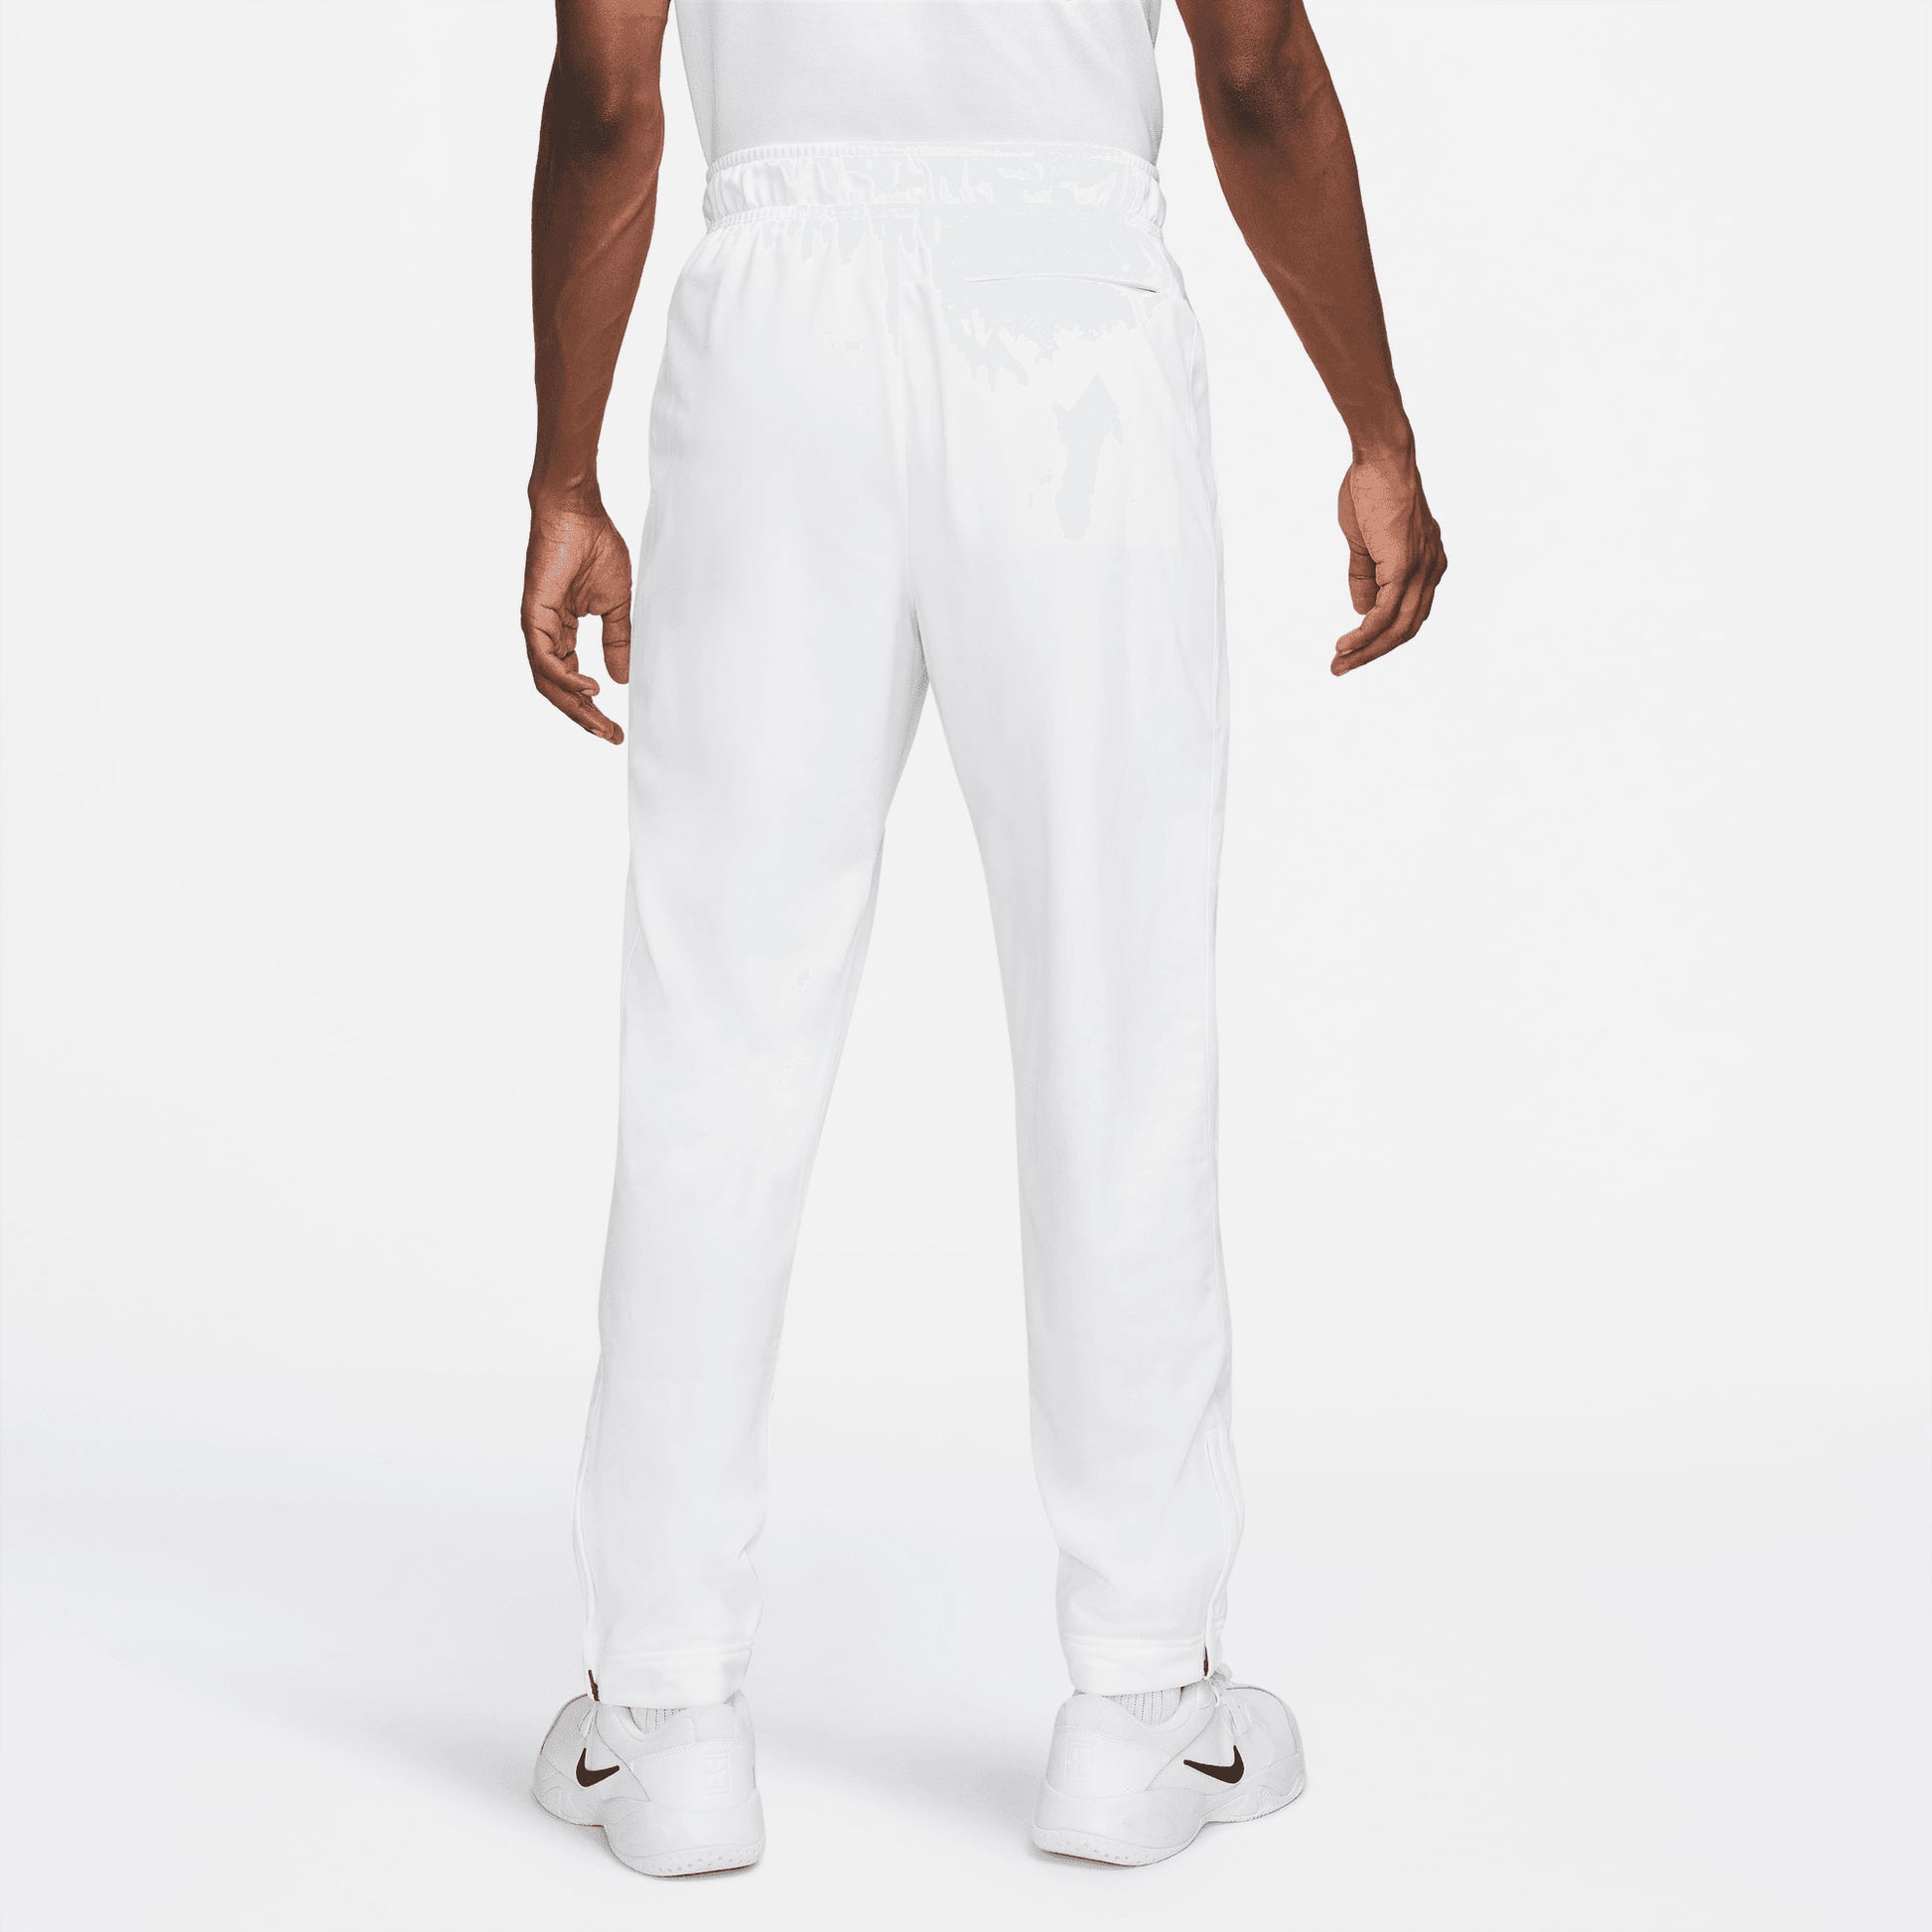 NikeCourt Heritage Men's Tennis Pants - White